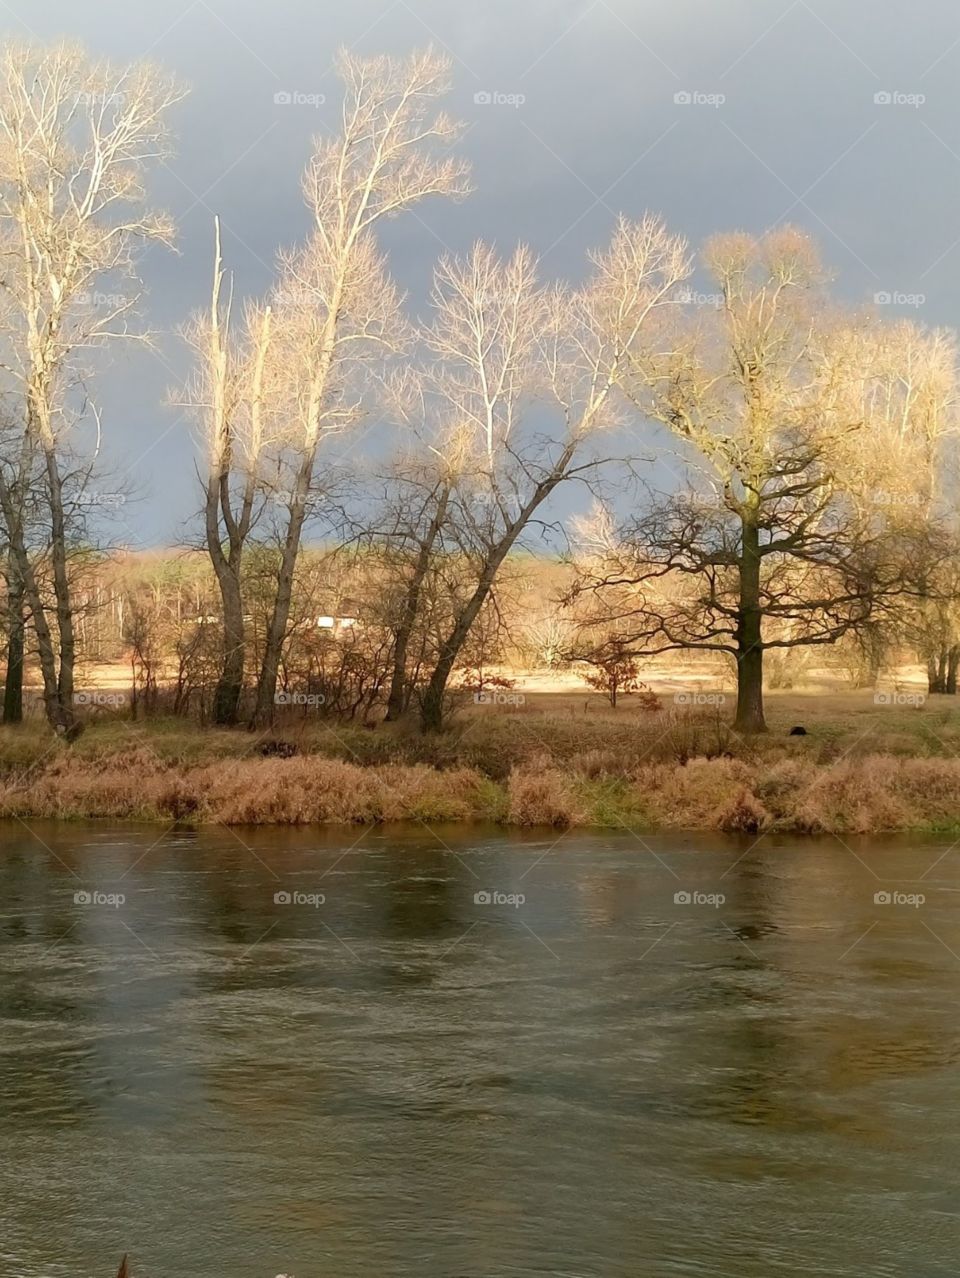 Before rain, at the river